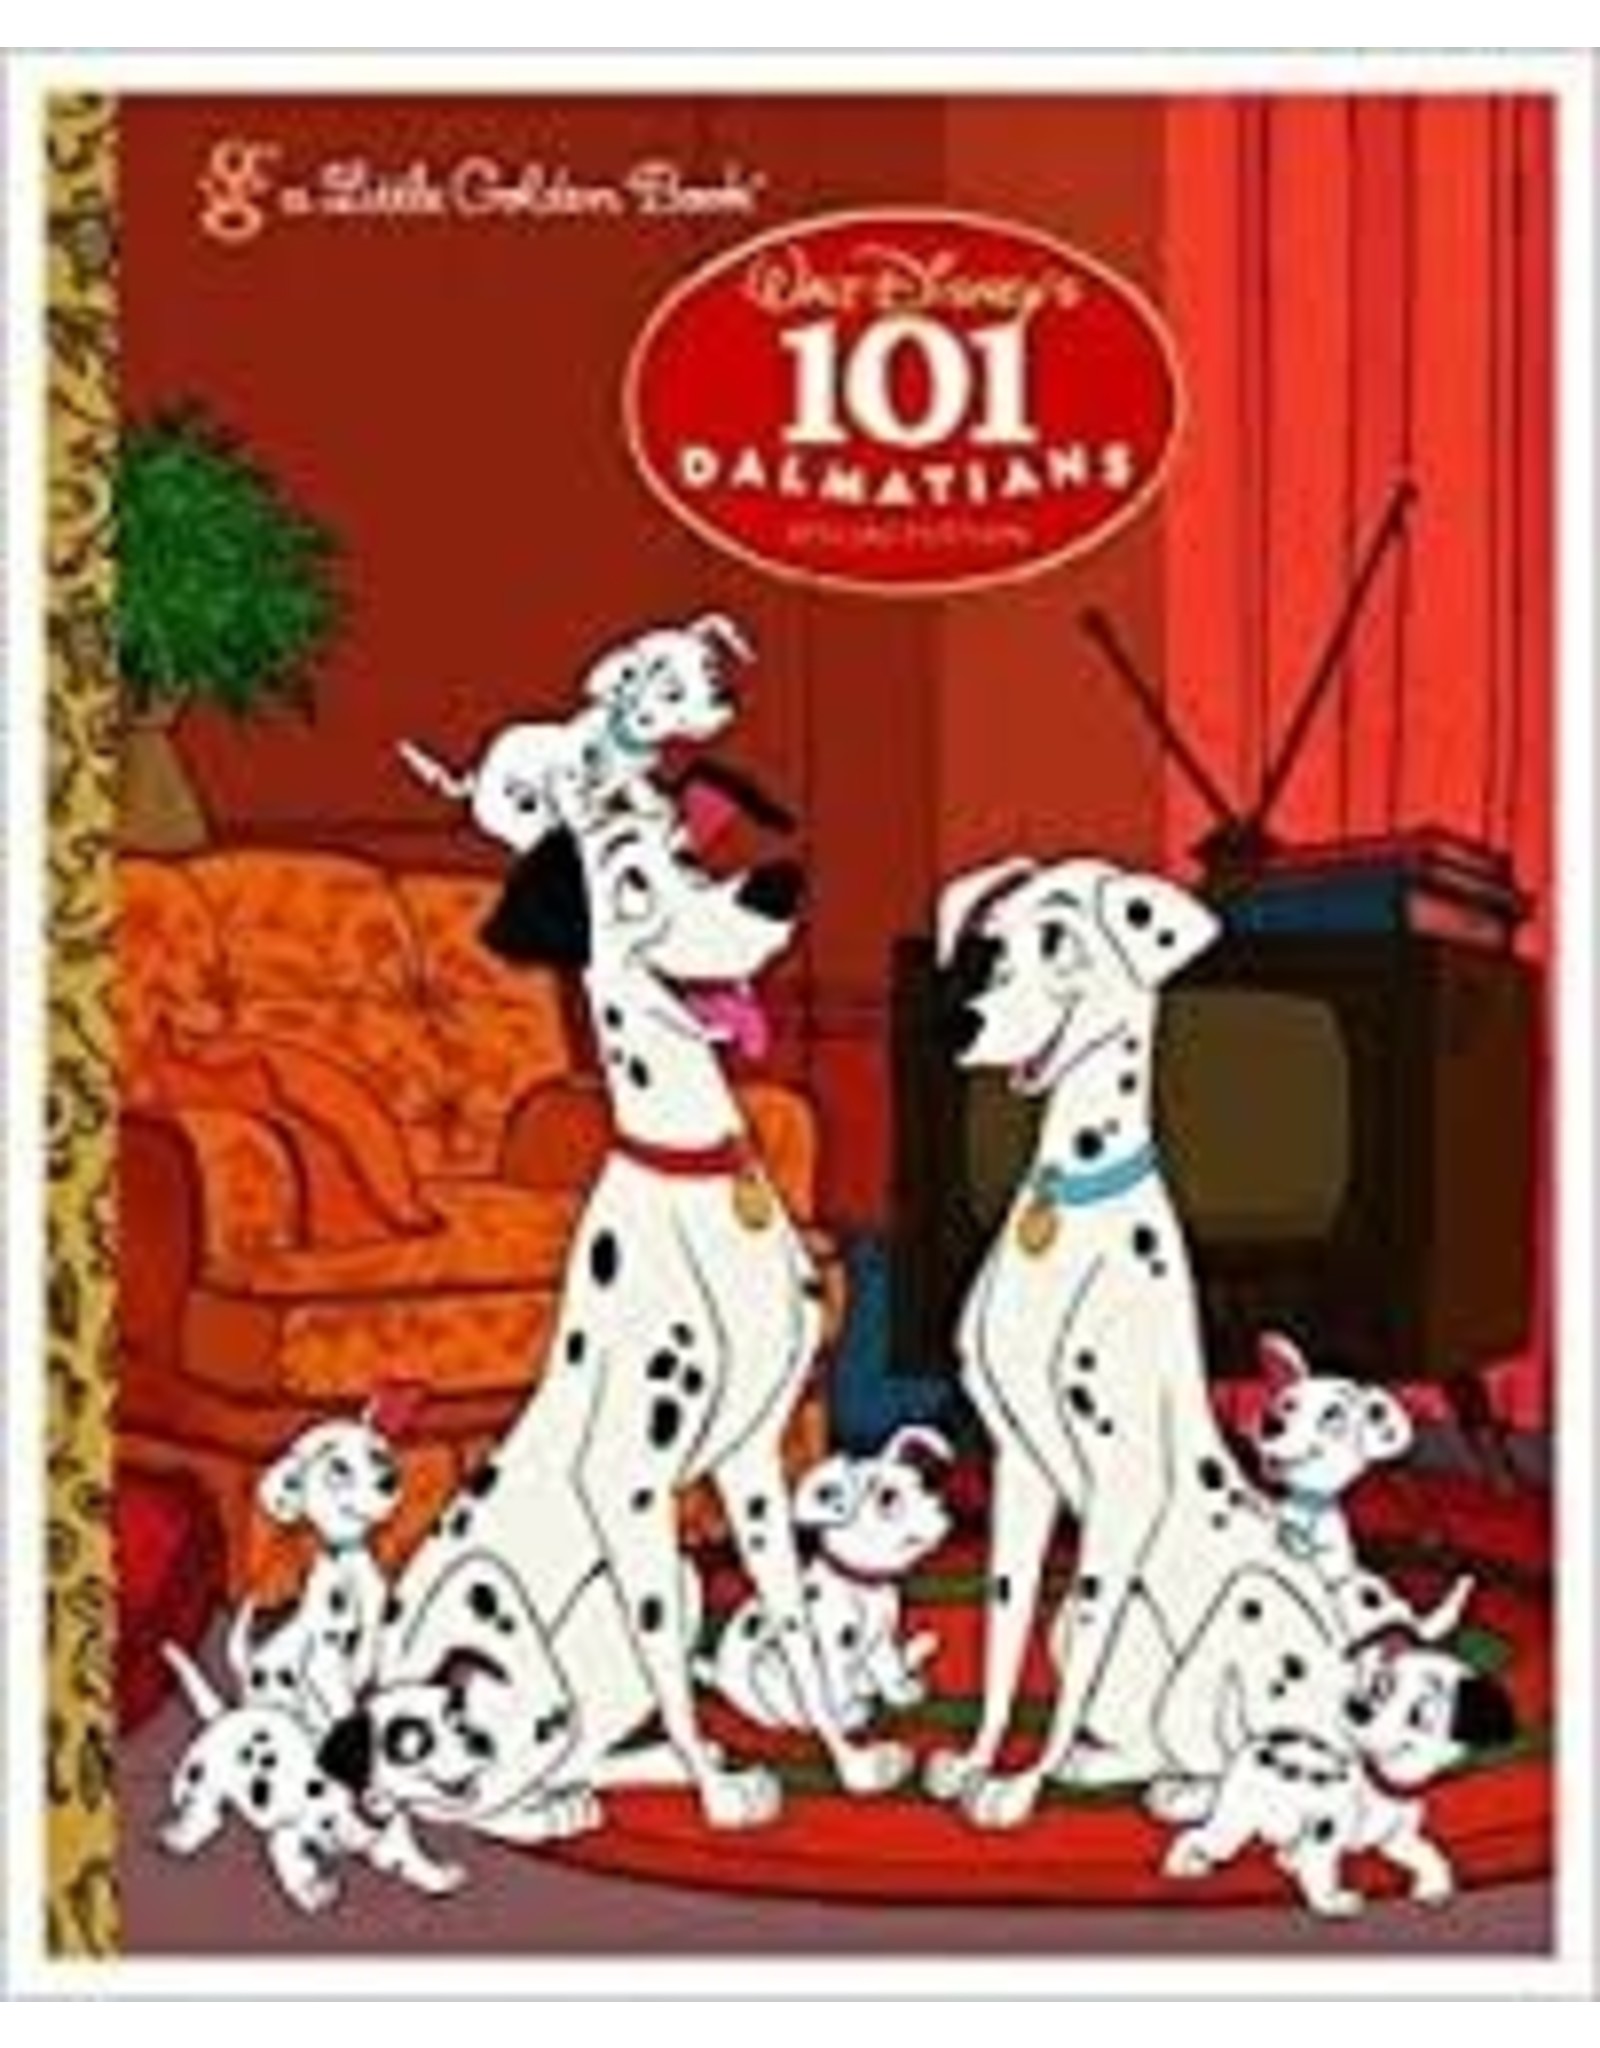 101 Dalmatians - Justine Korman